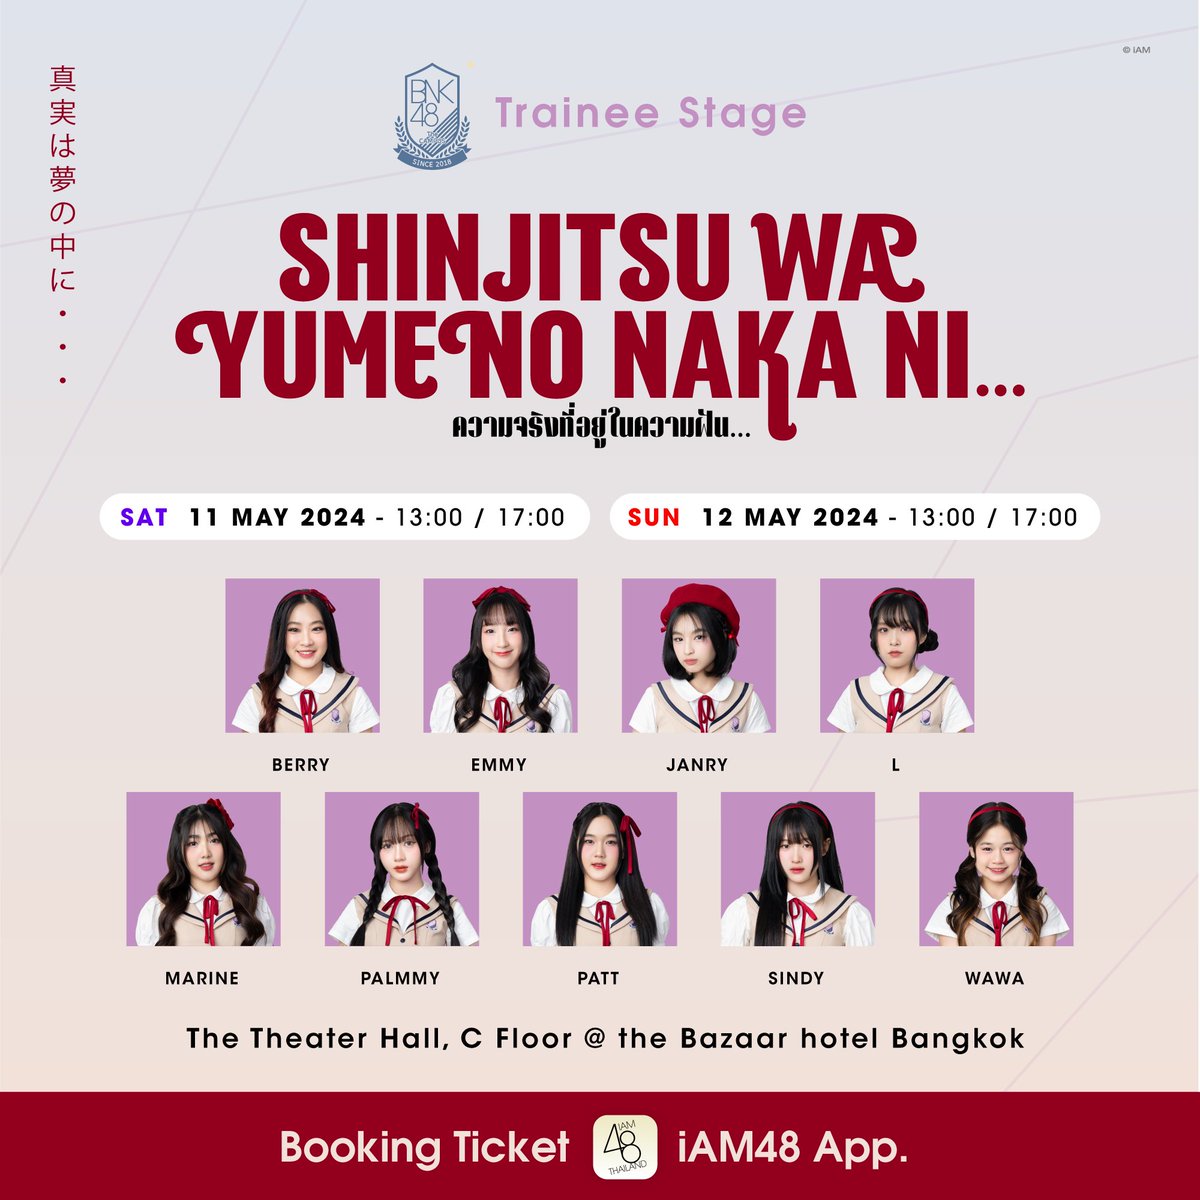 [💮✨] #ShinjitsuwaYumenoNakani BNK48 Trainee Stage 「Shinjitsu wa Yume no Naka ni… – ความจริงที่อยู่ในความฝัน…」 11-12 MAY 2024 | The Theater Hall, C Floor @ the Bazaar hotel Bangkok 🎟️ TICKET AVAILABLE: 6 MAY 2024 (12:00) @ iAM48 Application #BNK48Trainee #BNK48